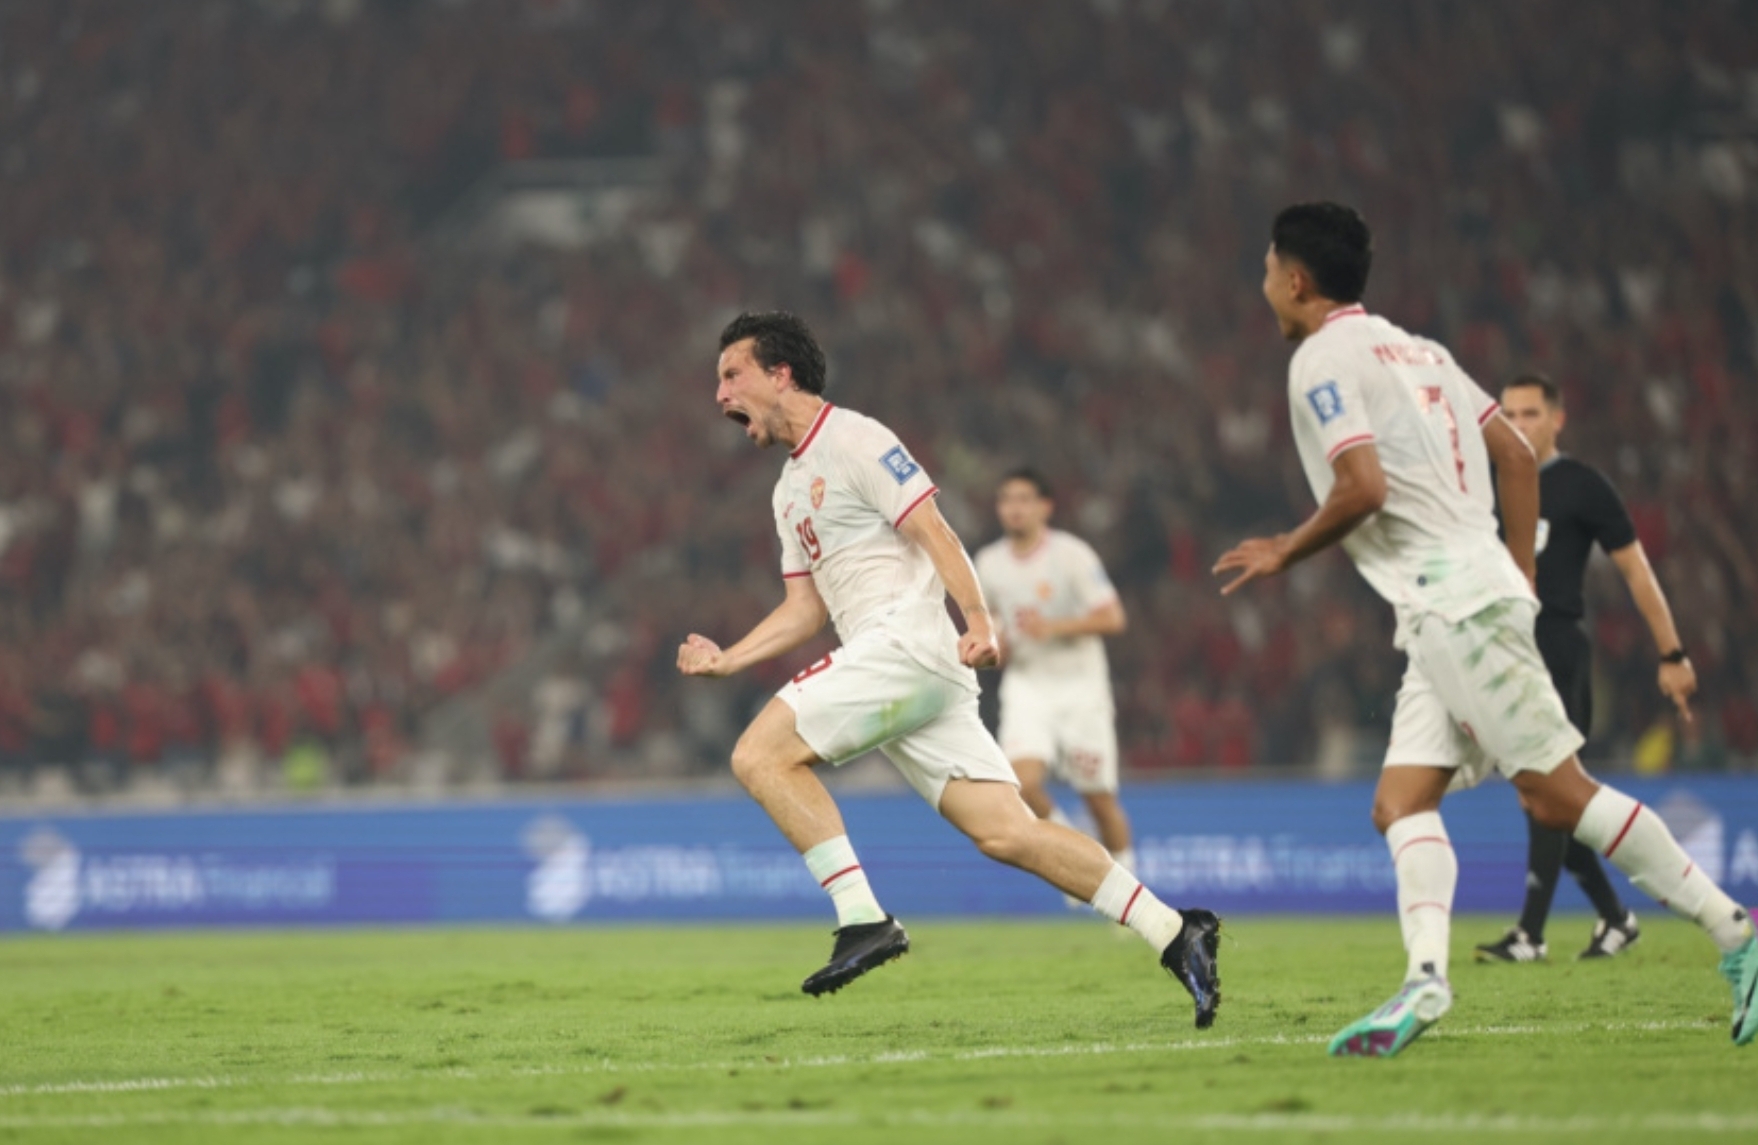 Timnas Indonesia Naik 1 Peringkat di Ranking FIFA, Kini Ada di Posisi 133